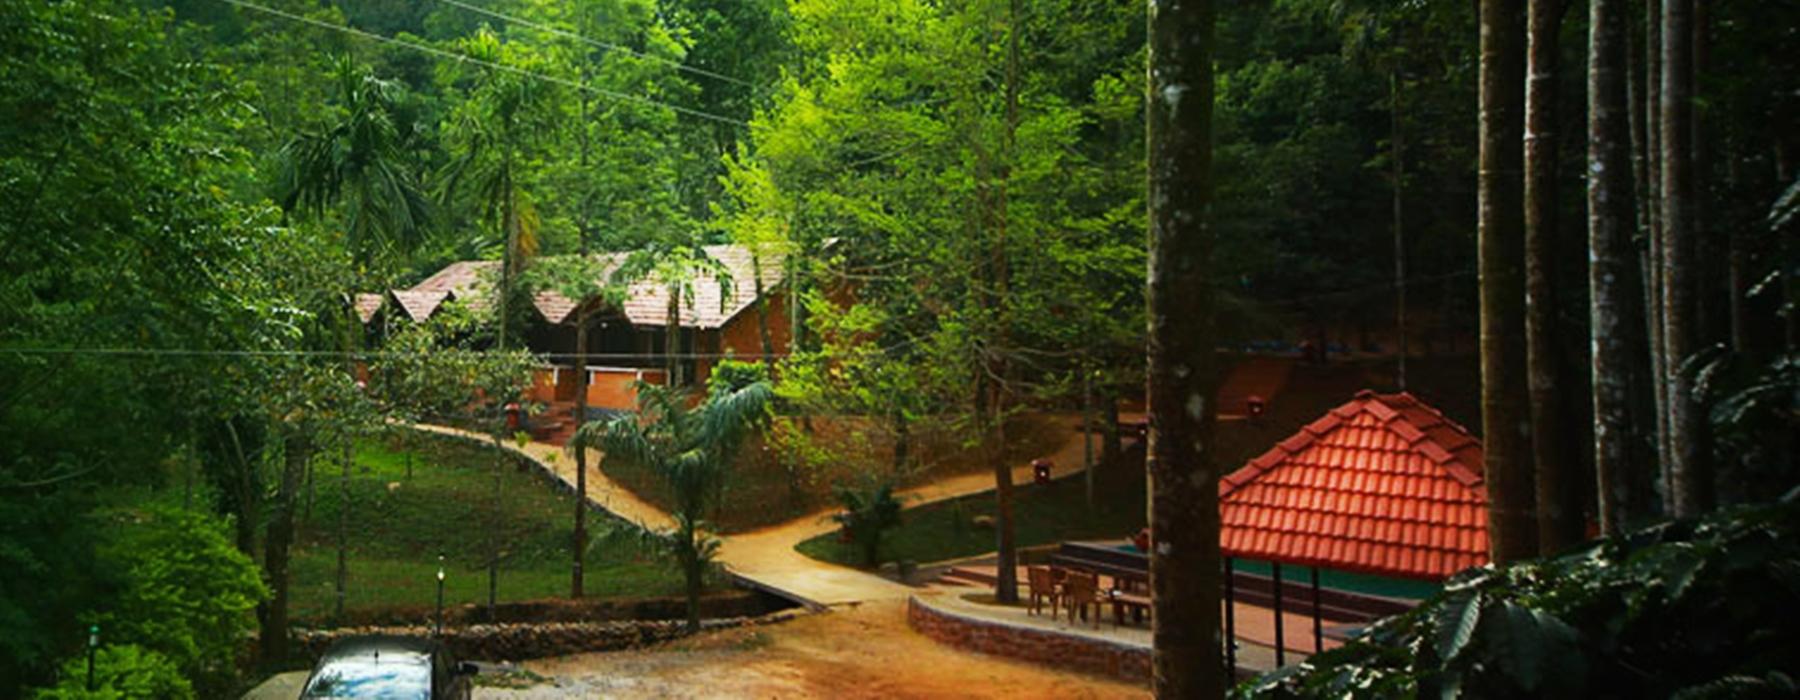 Silent Creek Resort